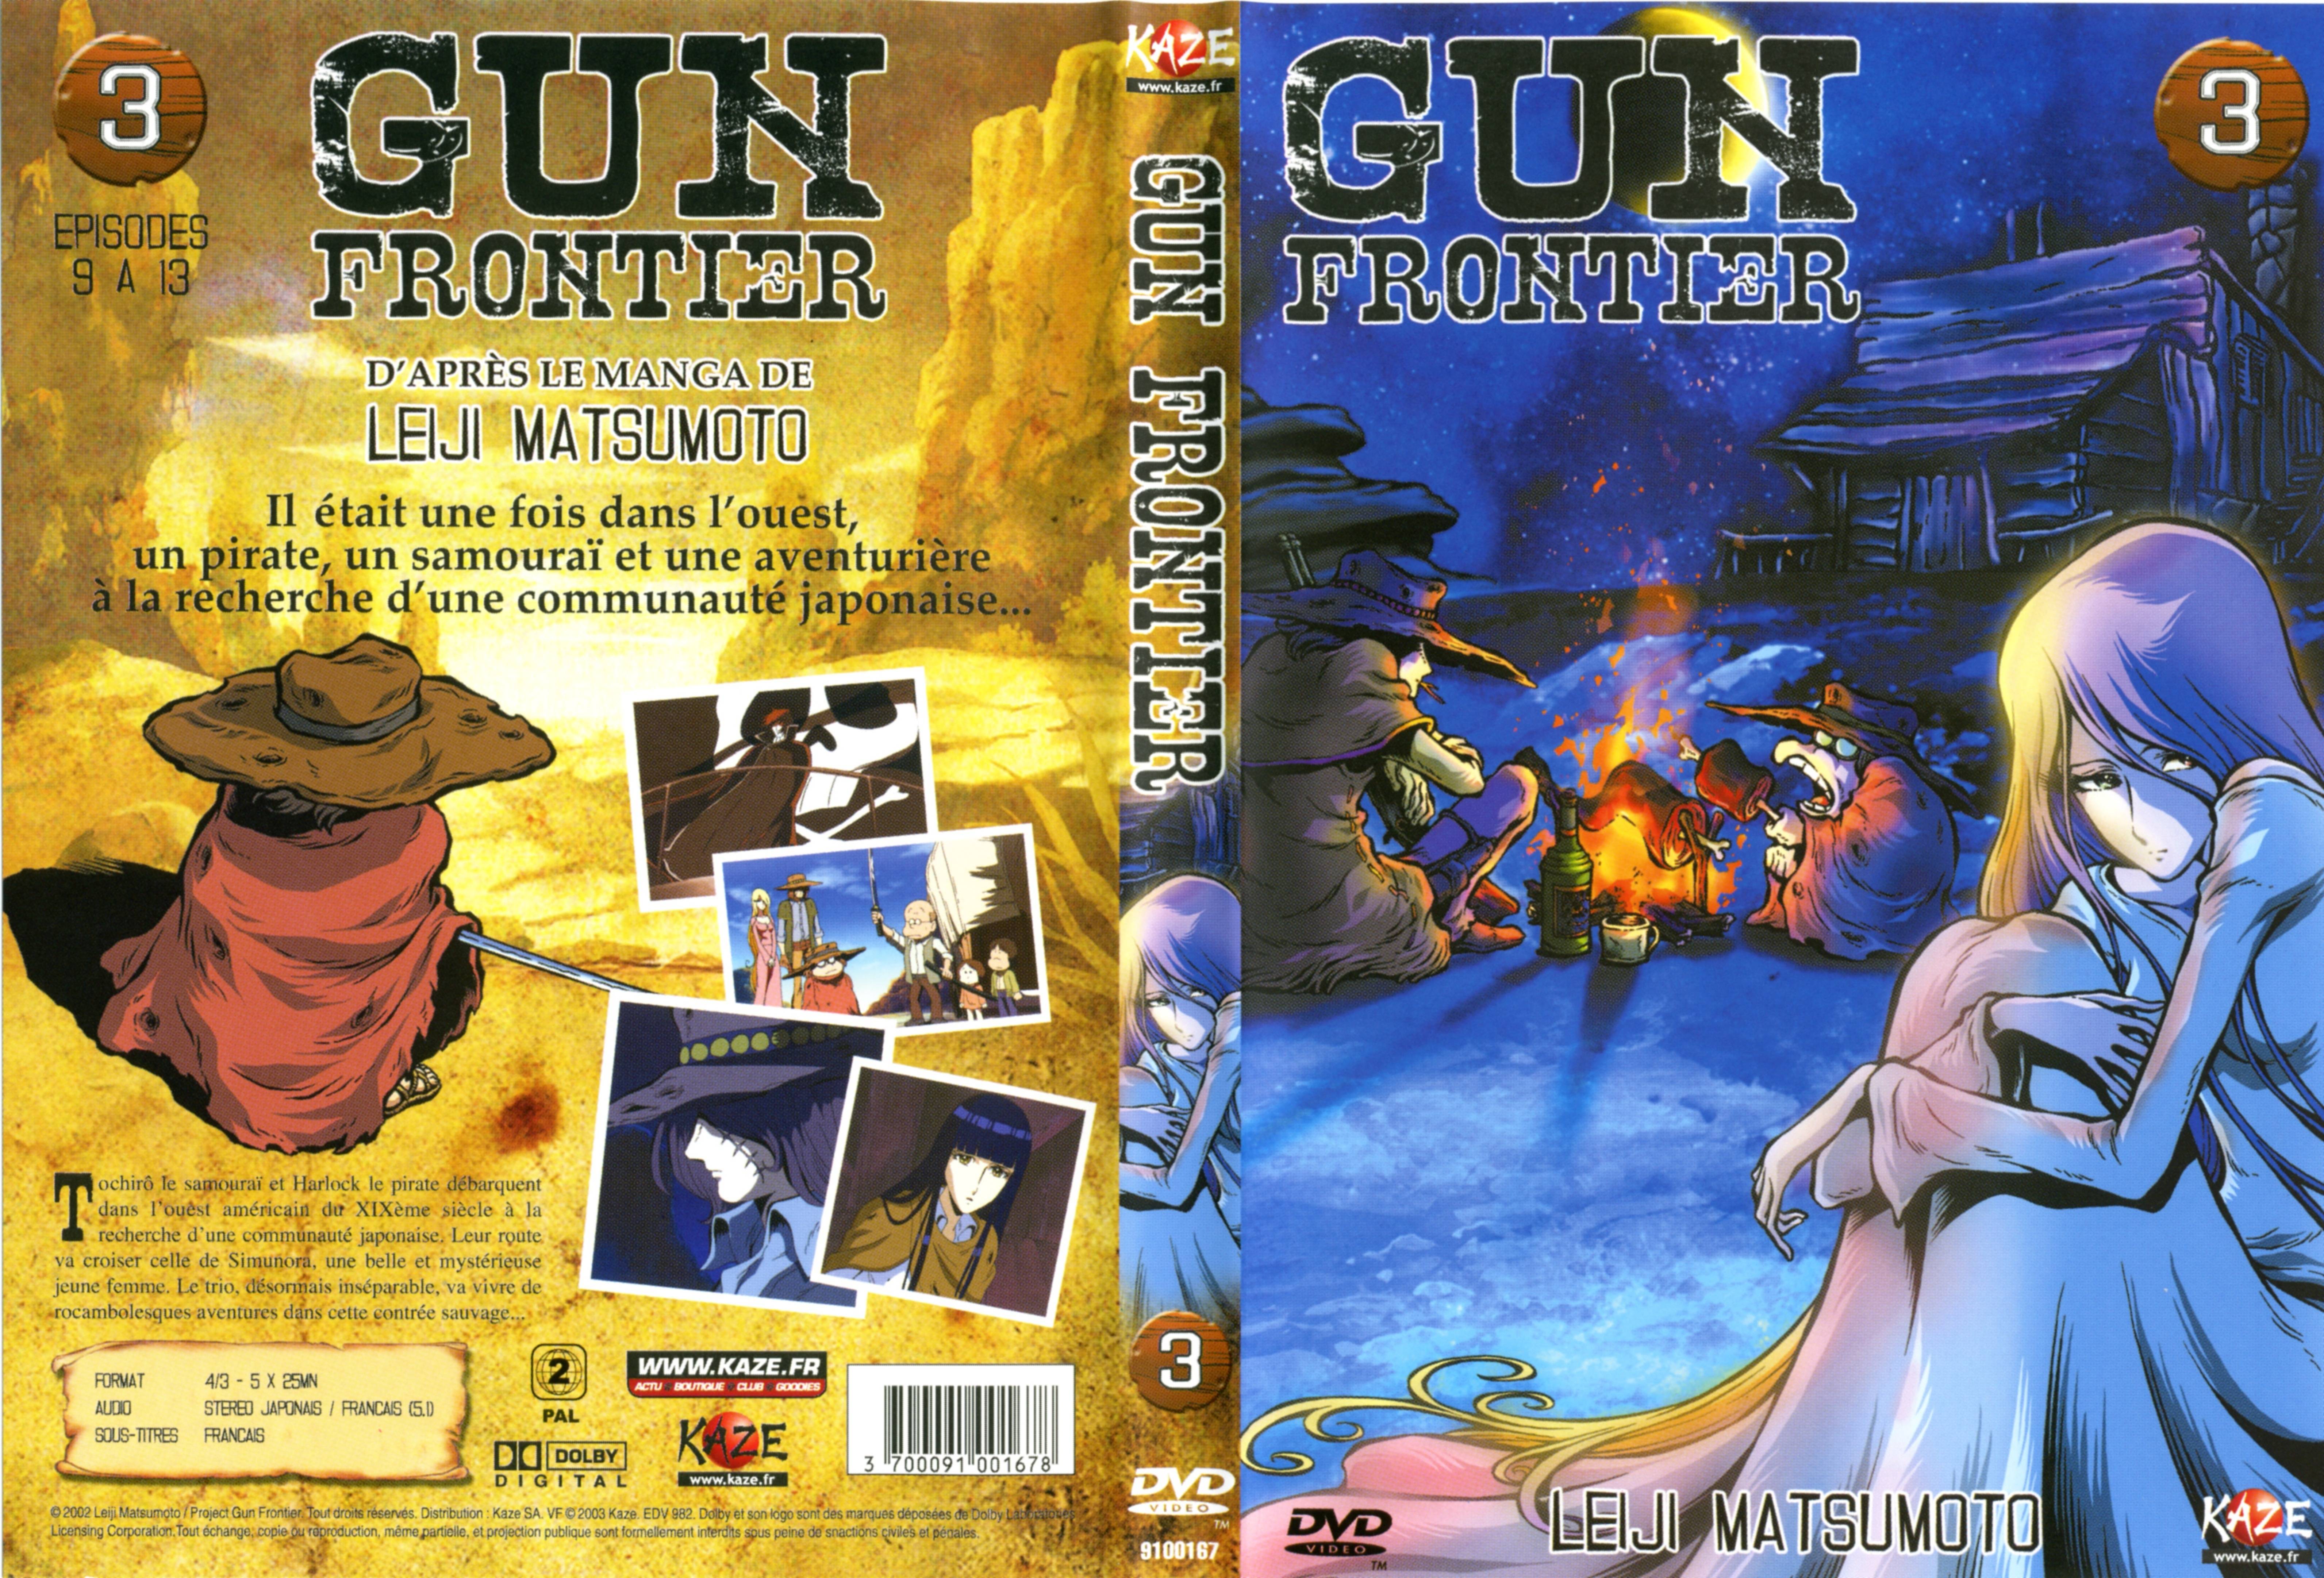 Jaquette DVD Gun frontier vol 3